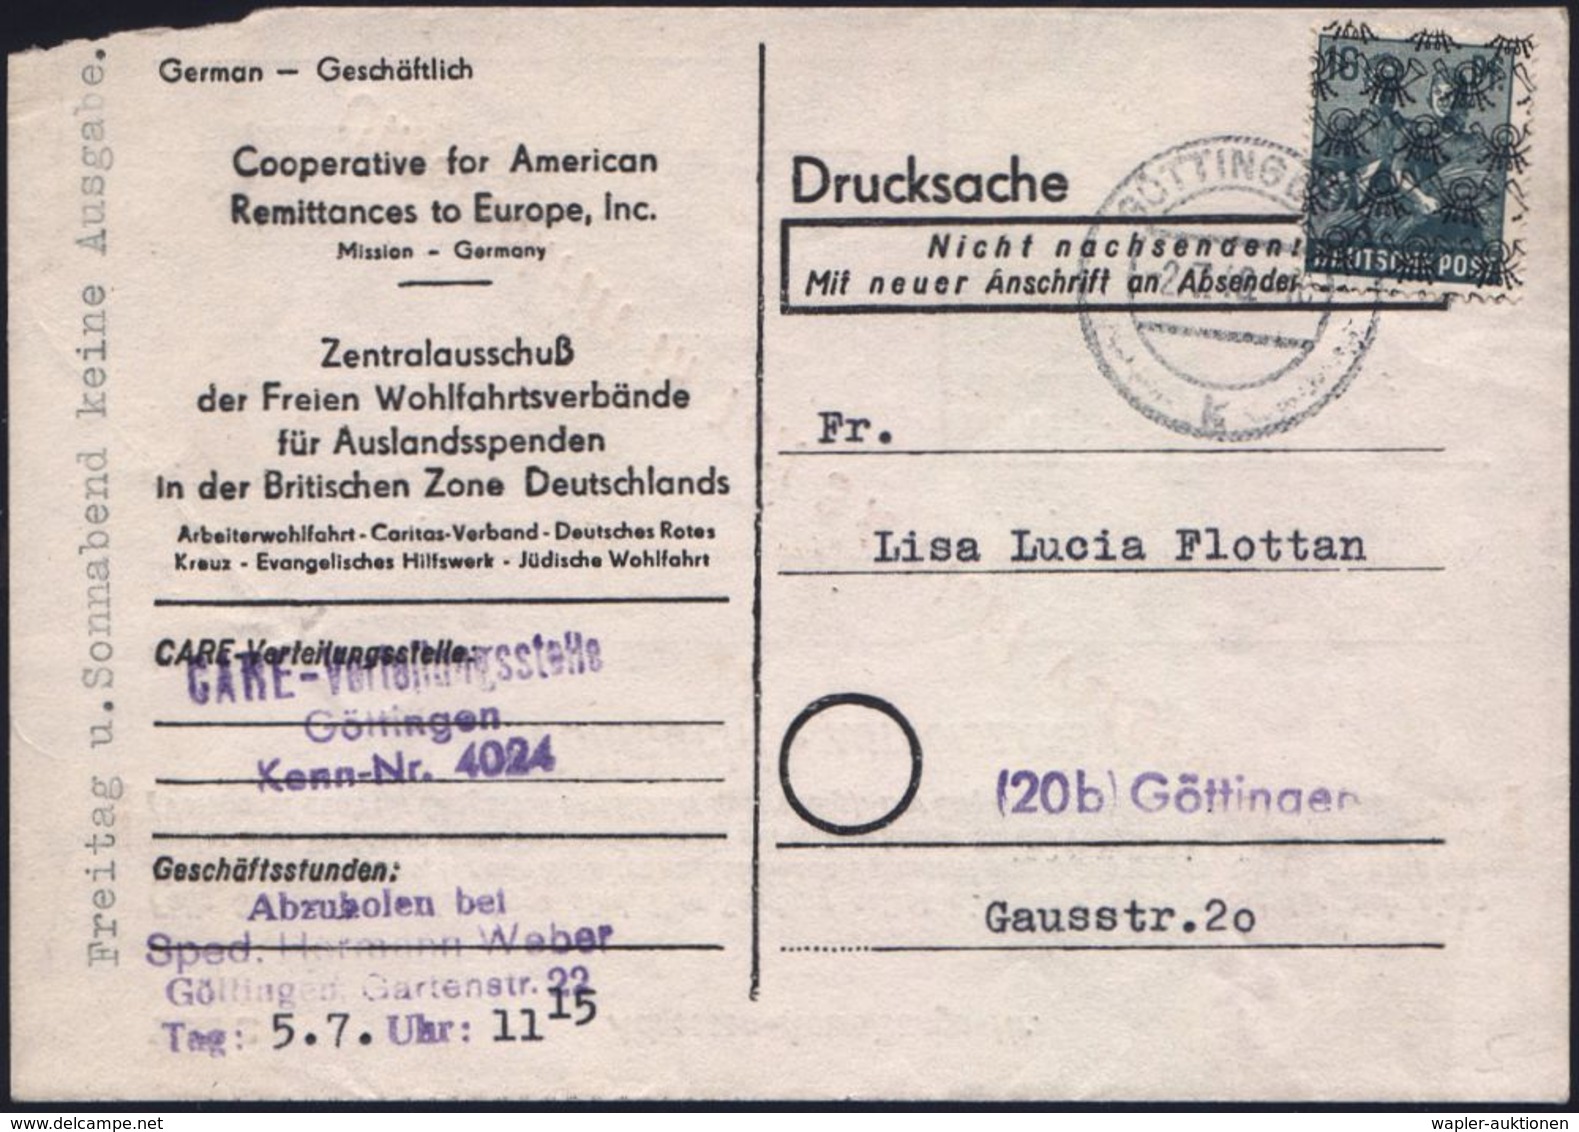 GÖTTINGEN 1/ K 1948 (2.7.) 2K-Steg Auf EF 16 Pf. Posthorn-Netz + Viol. HdN: CARE-Verbindungesstelle/Göttingen/Kenn-Nr. , - WO2